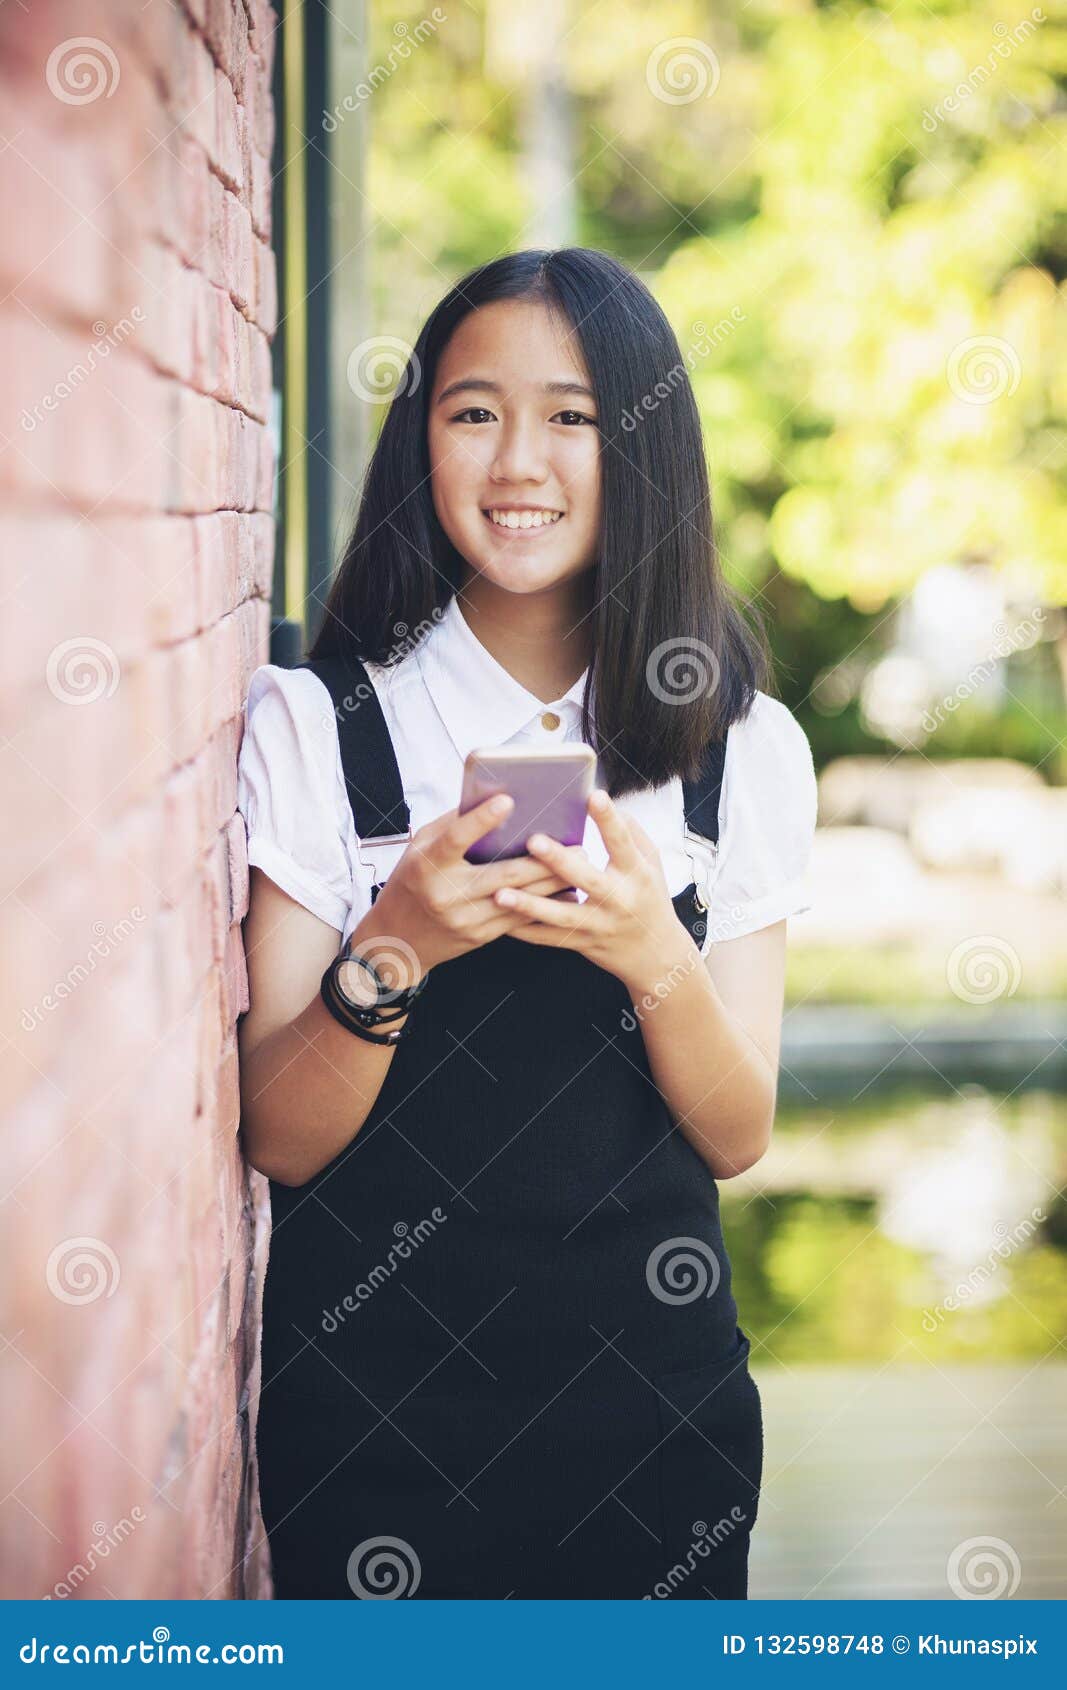 Hot Asian College Girl Telegraph 